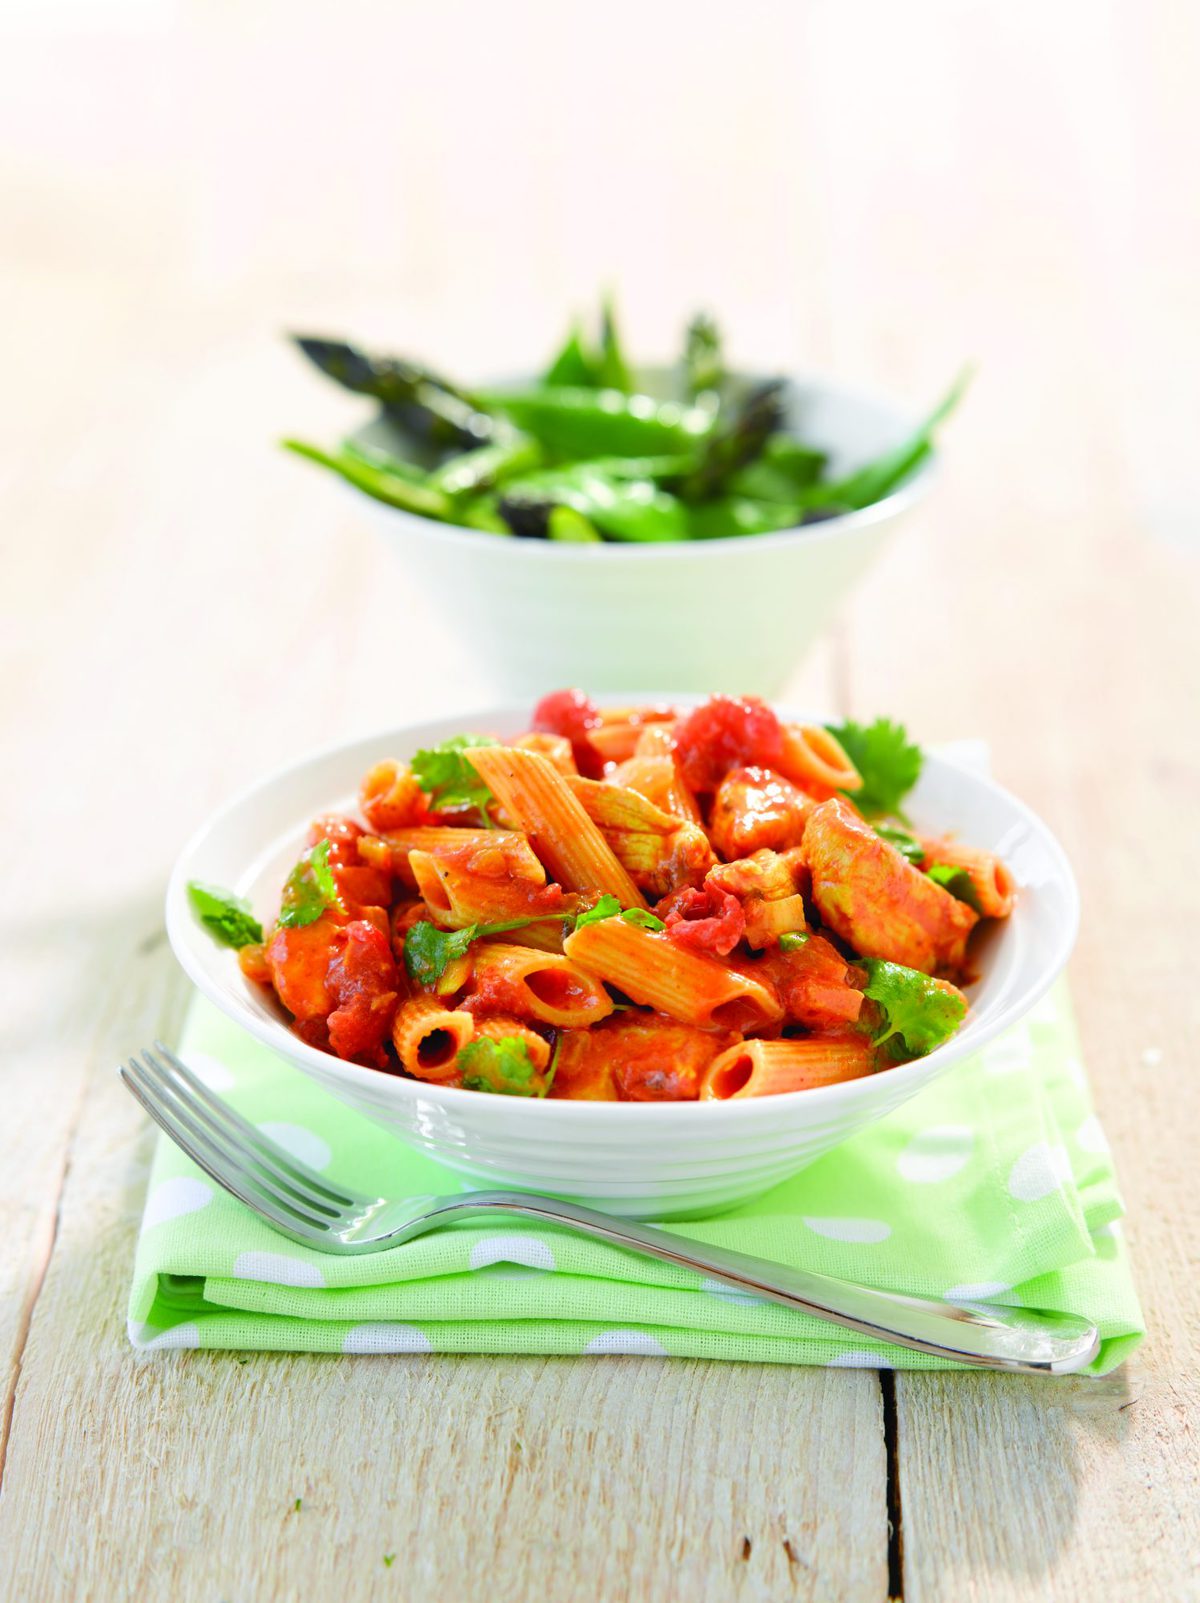 Chicken korma tomato pasta - Healthy Food Guide